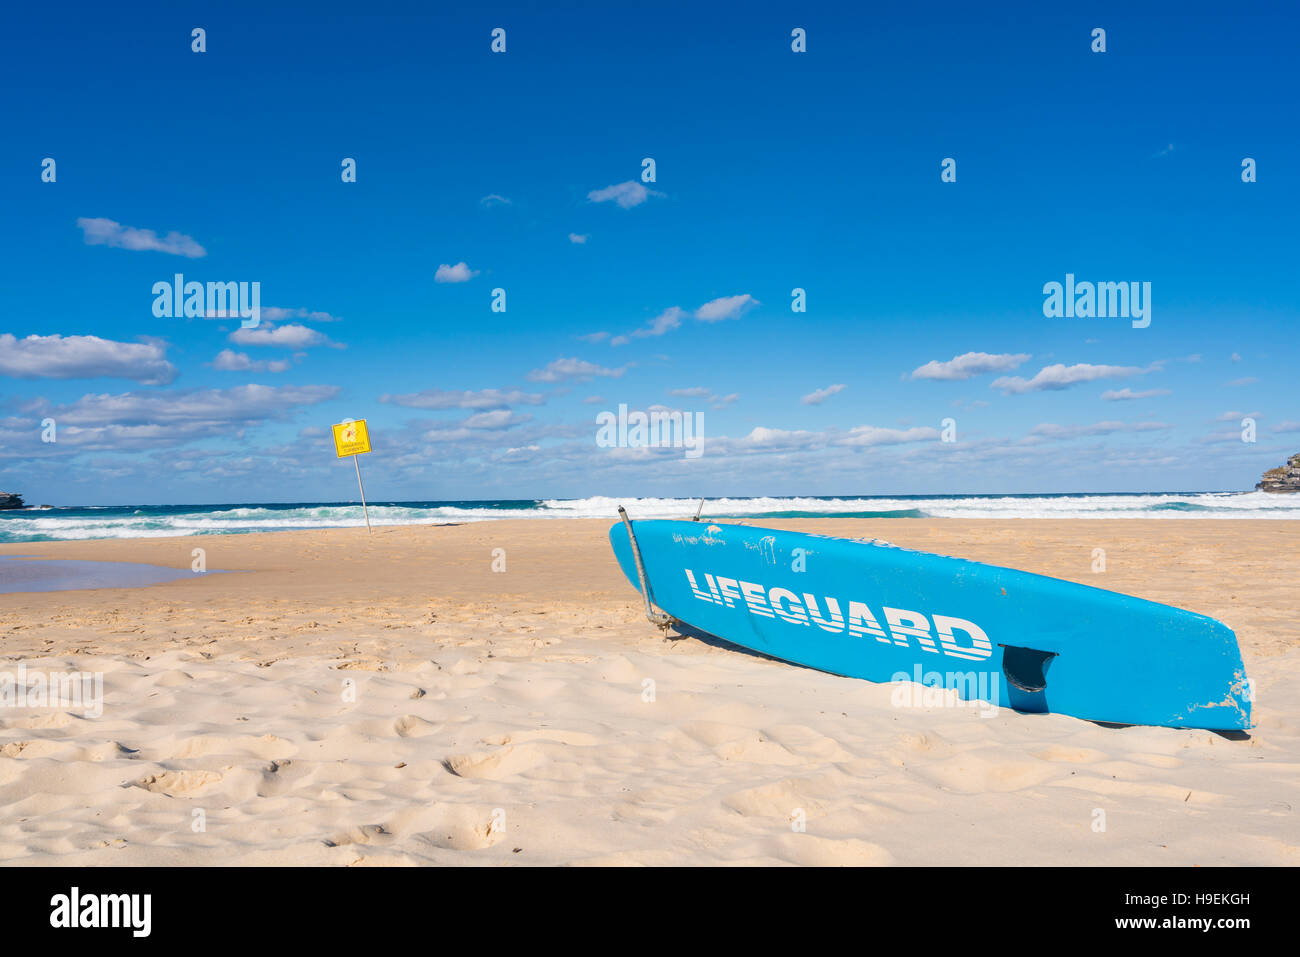 Lifeguard surfboard on beach Banque D'Images